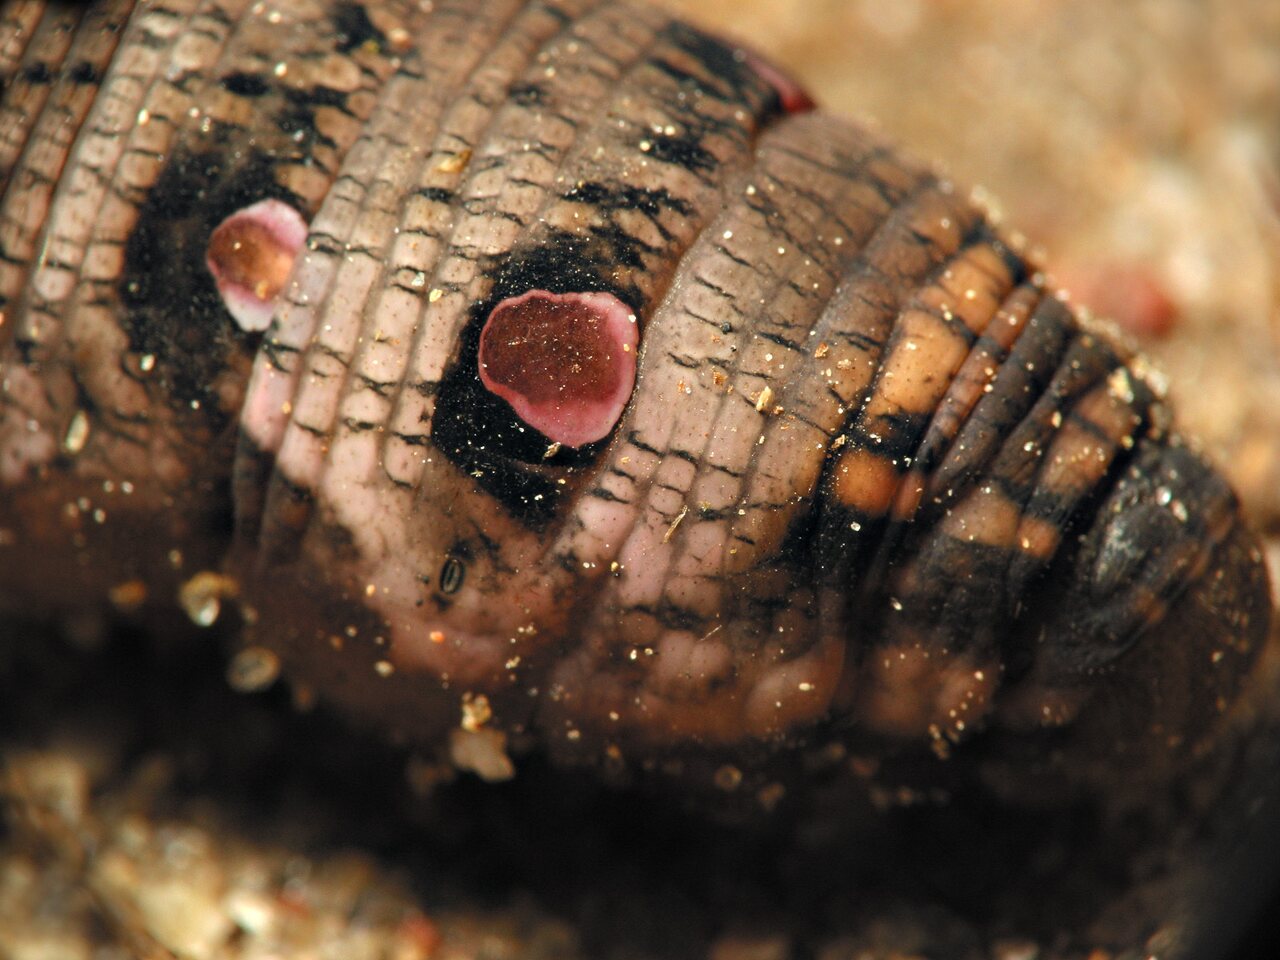 Deilephila-elpenor-larva-6530.jpg